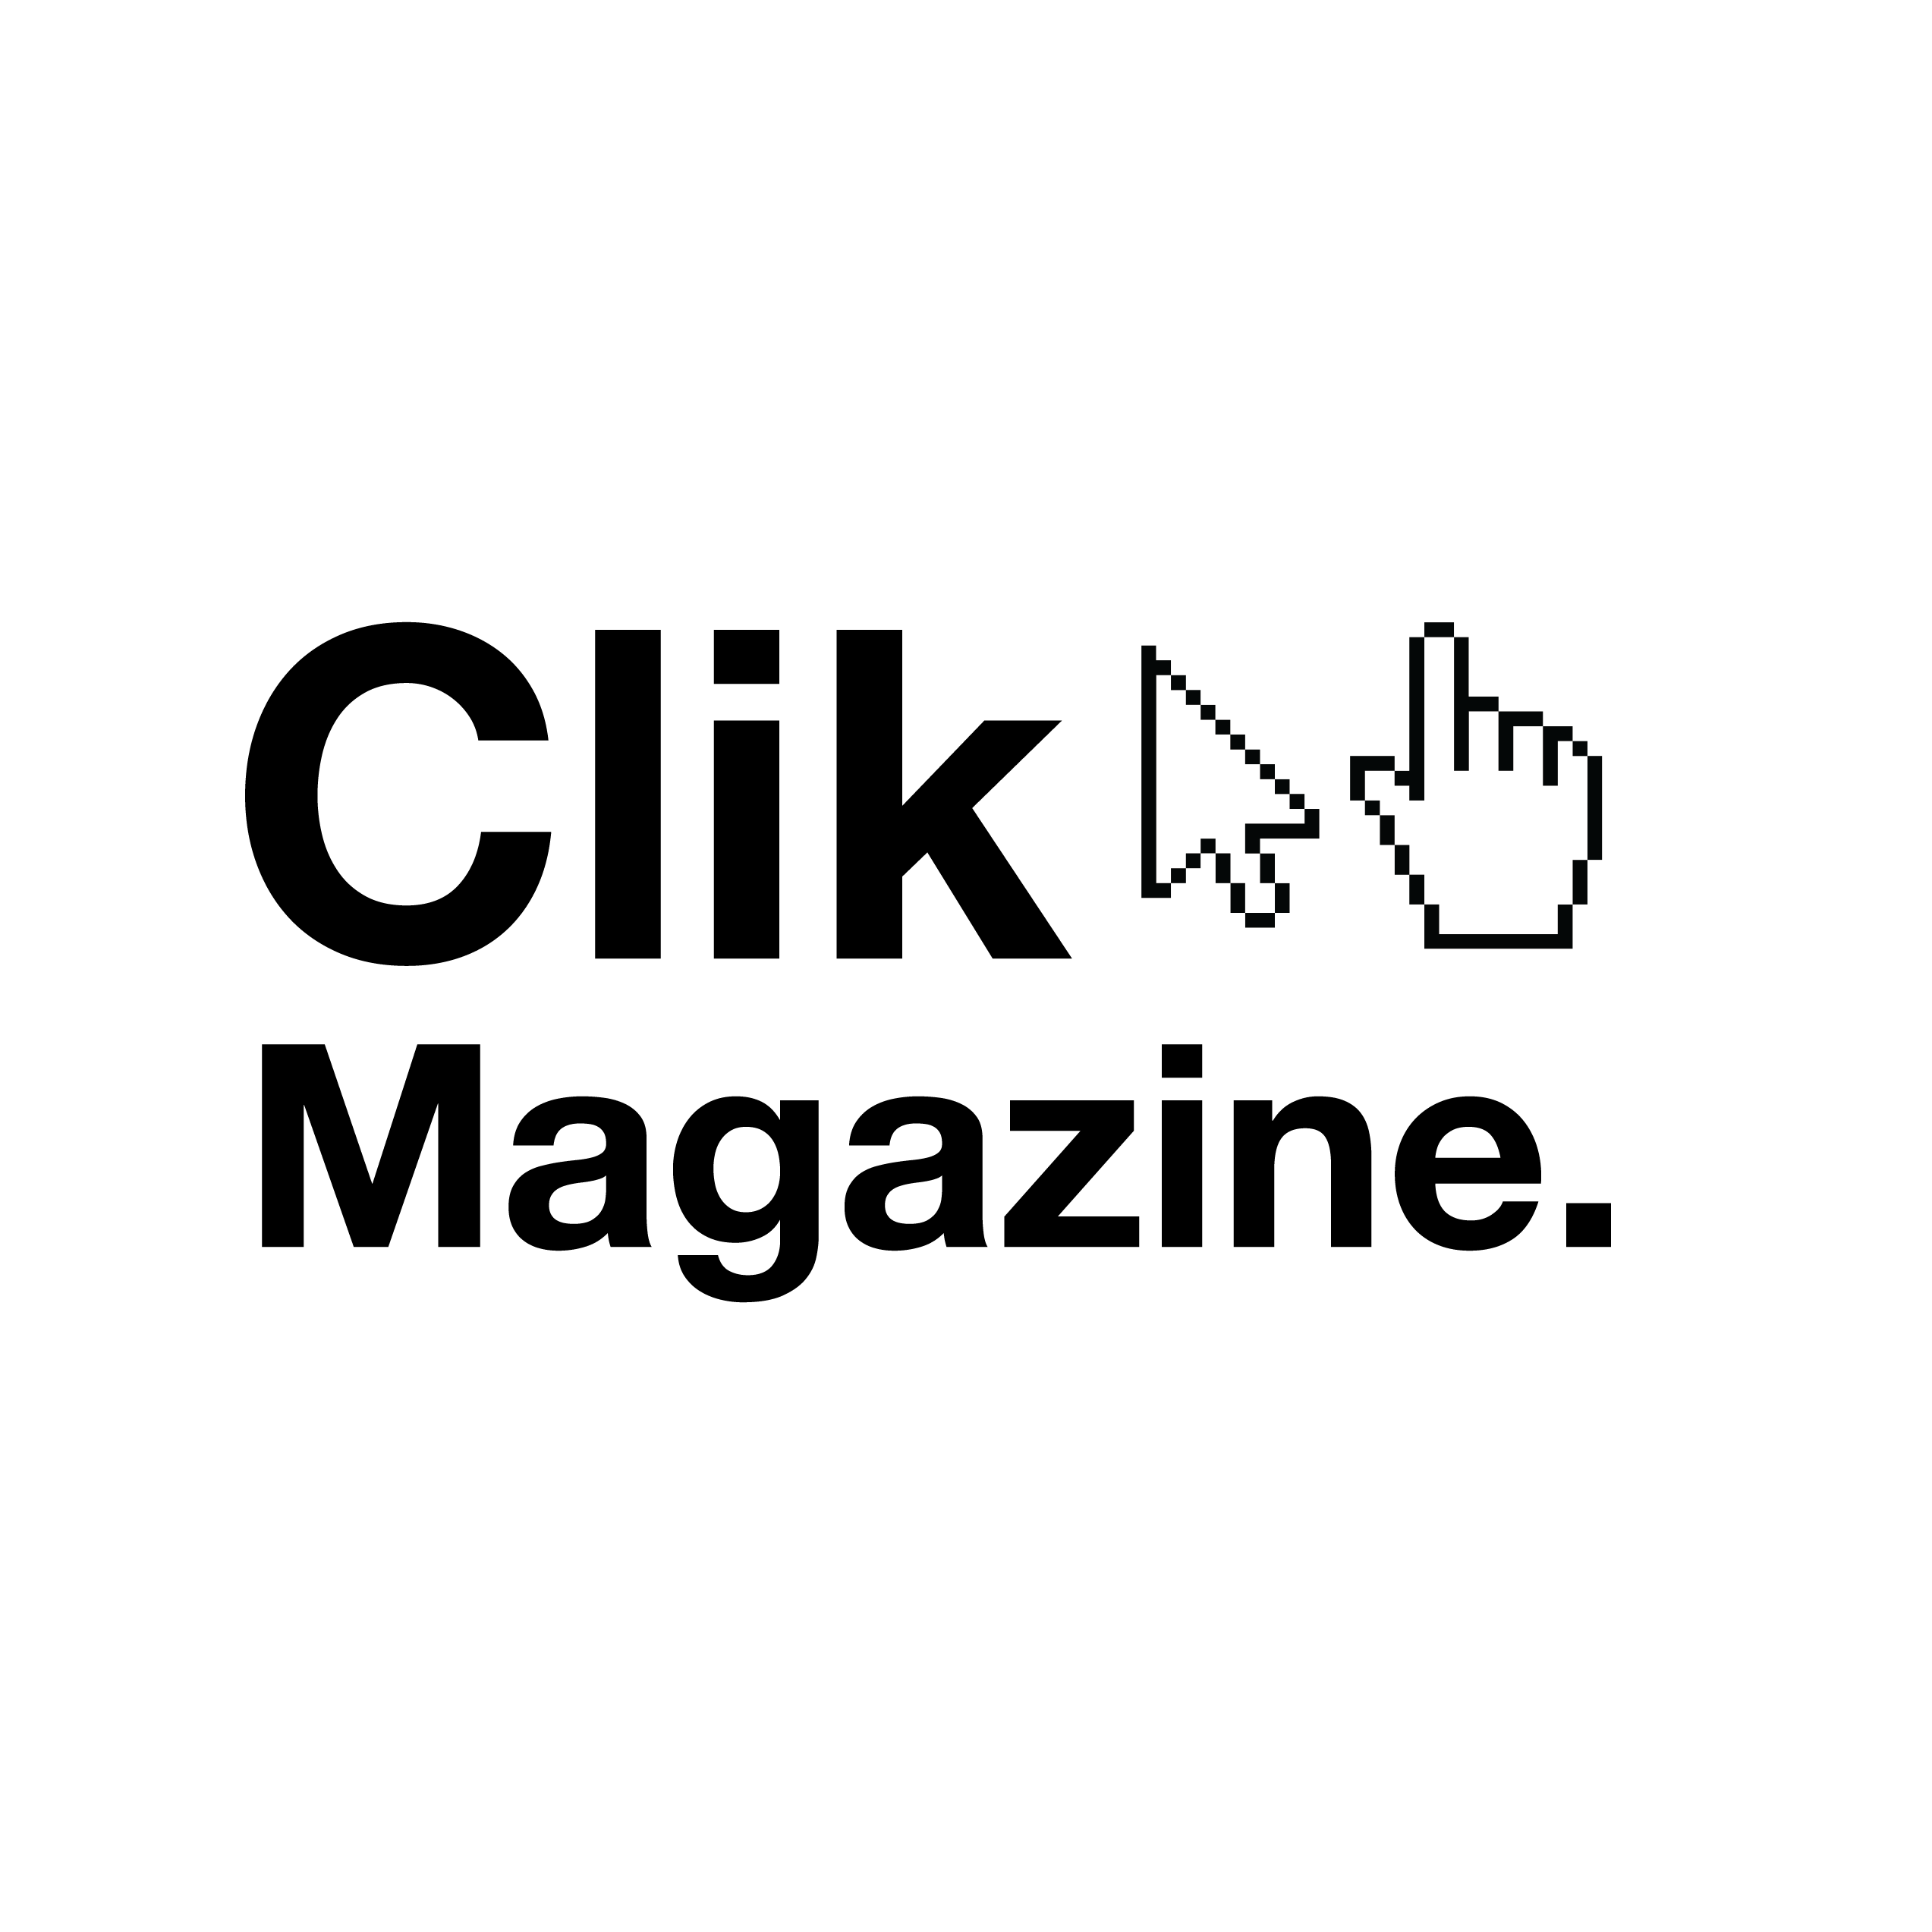 Clik Magazine – The Cutting Edge For All